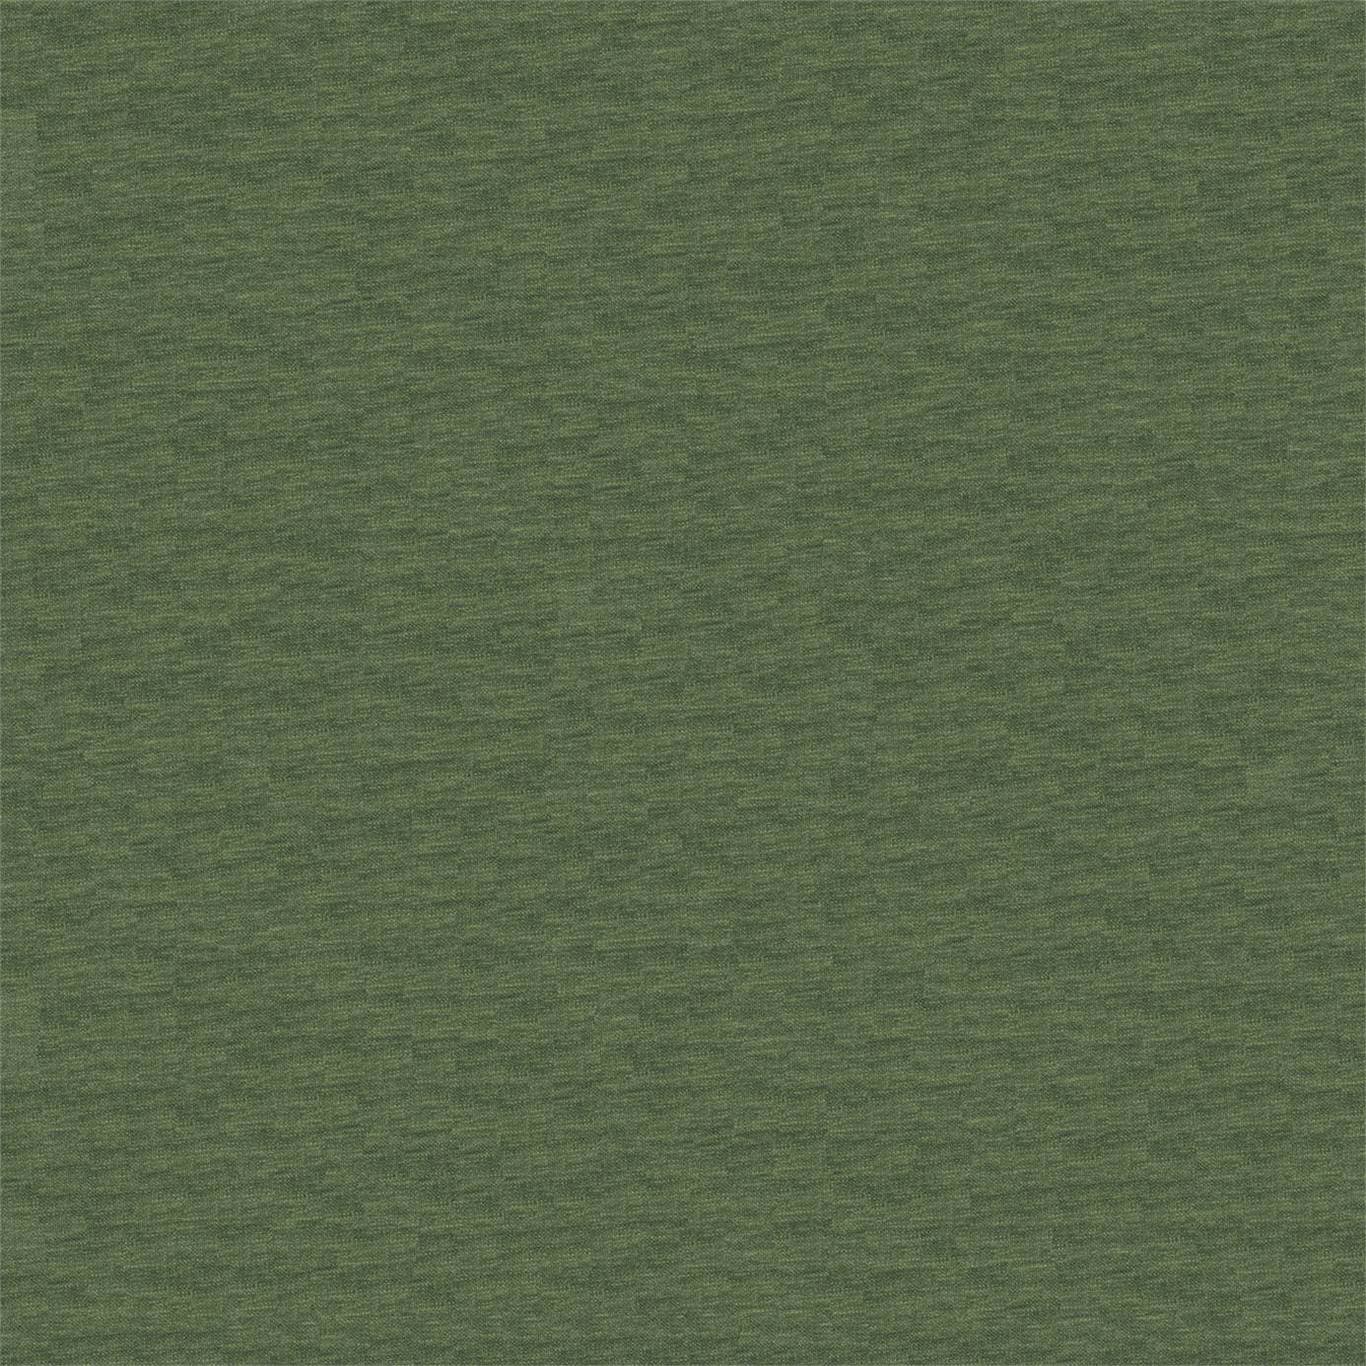 Esala Plains Fabric by Scion